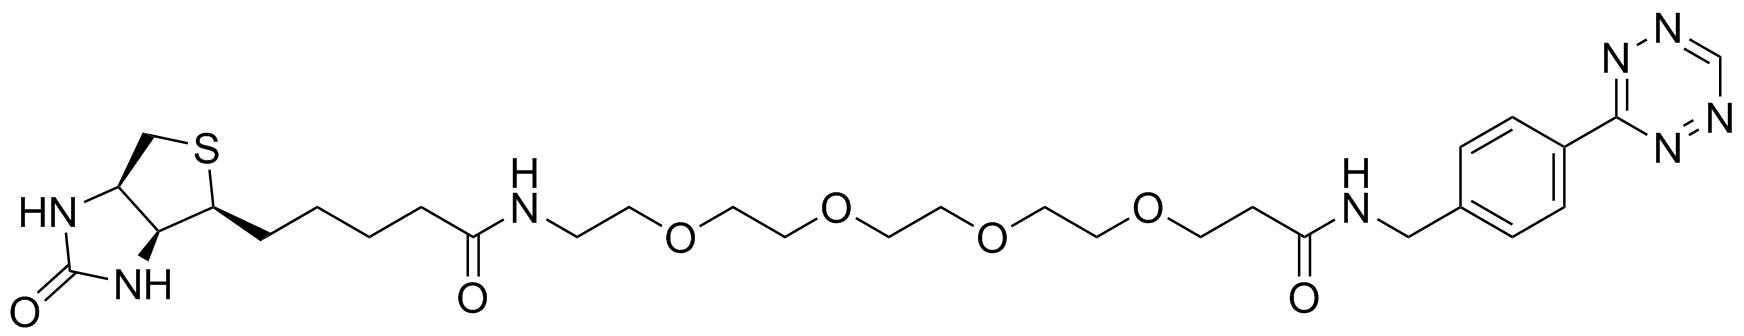 Tetrazine-PEG4-biotin